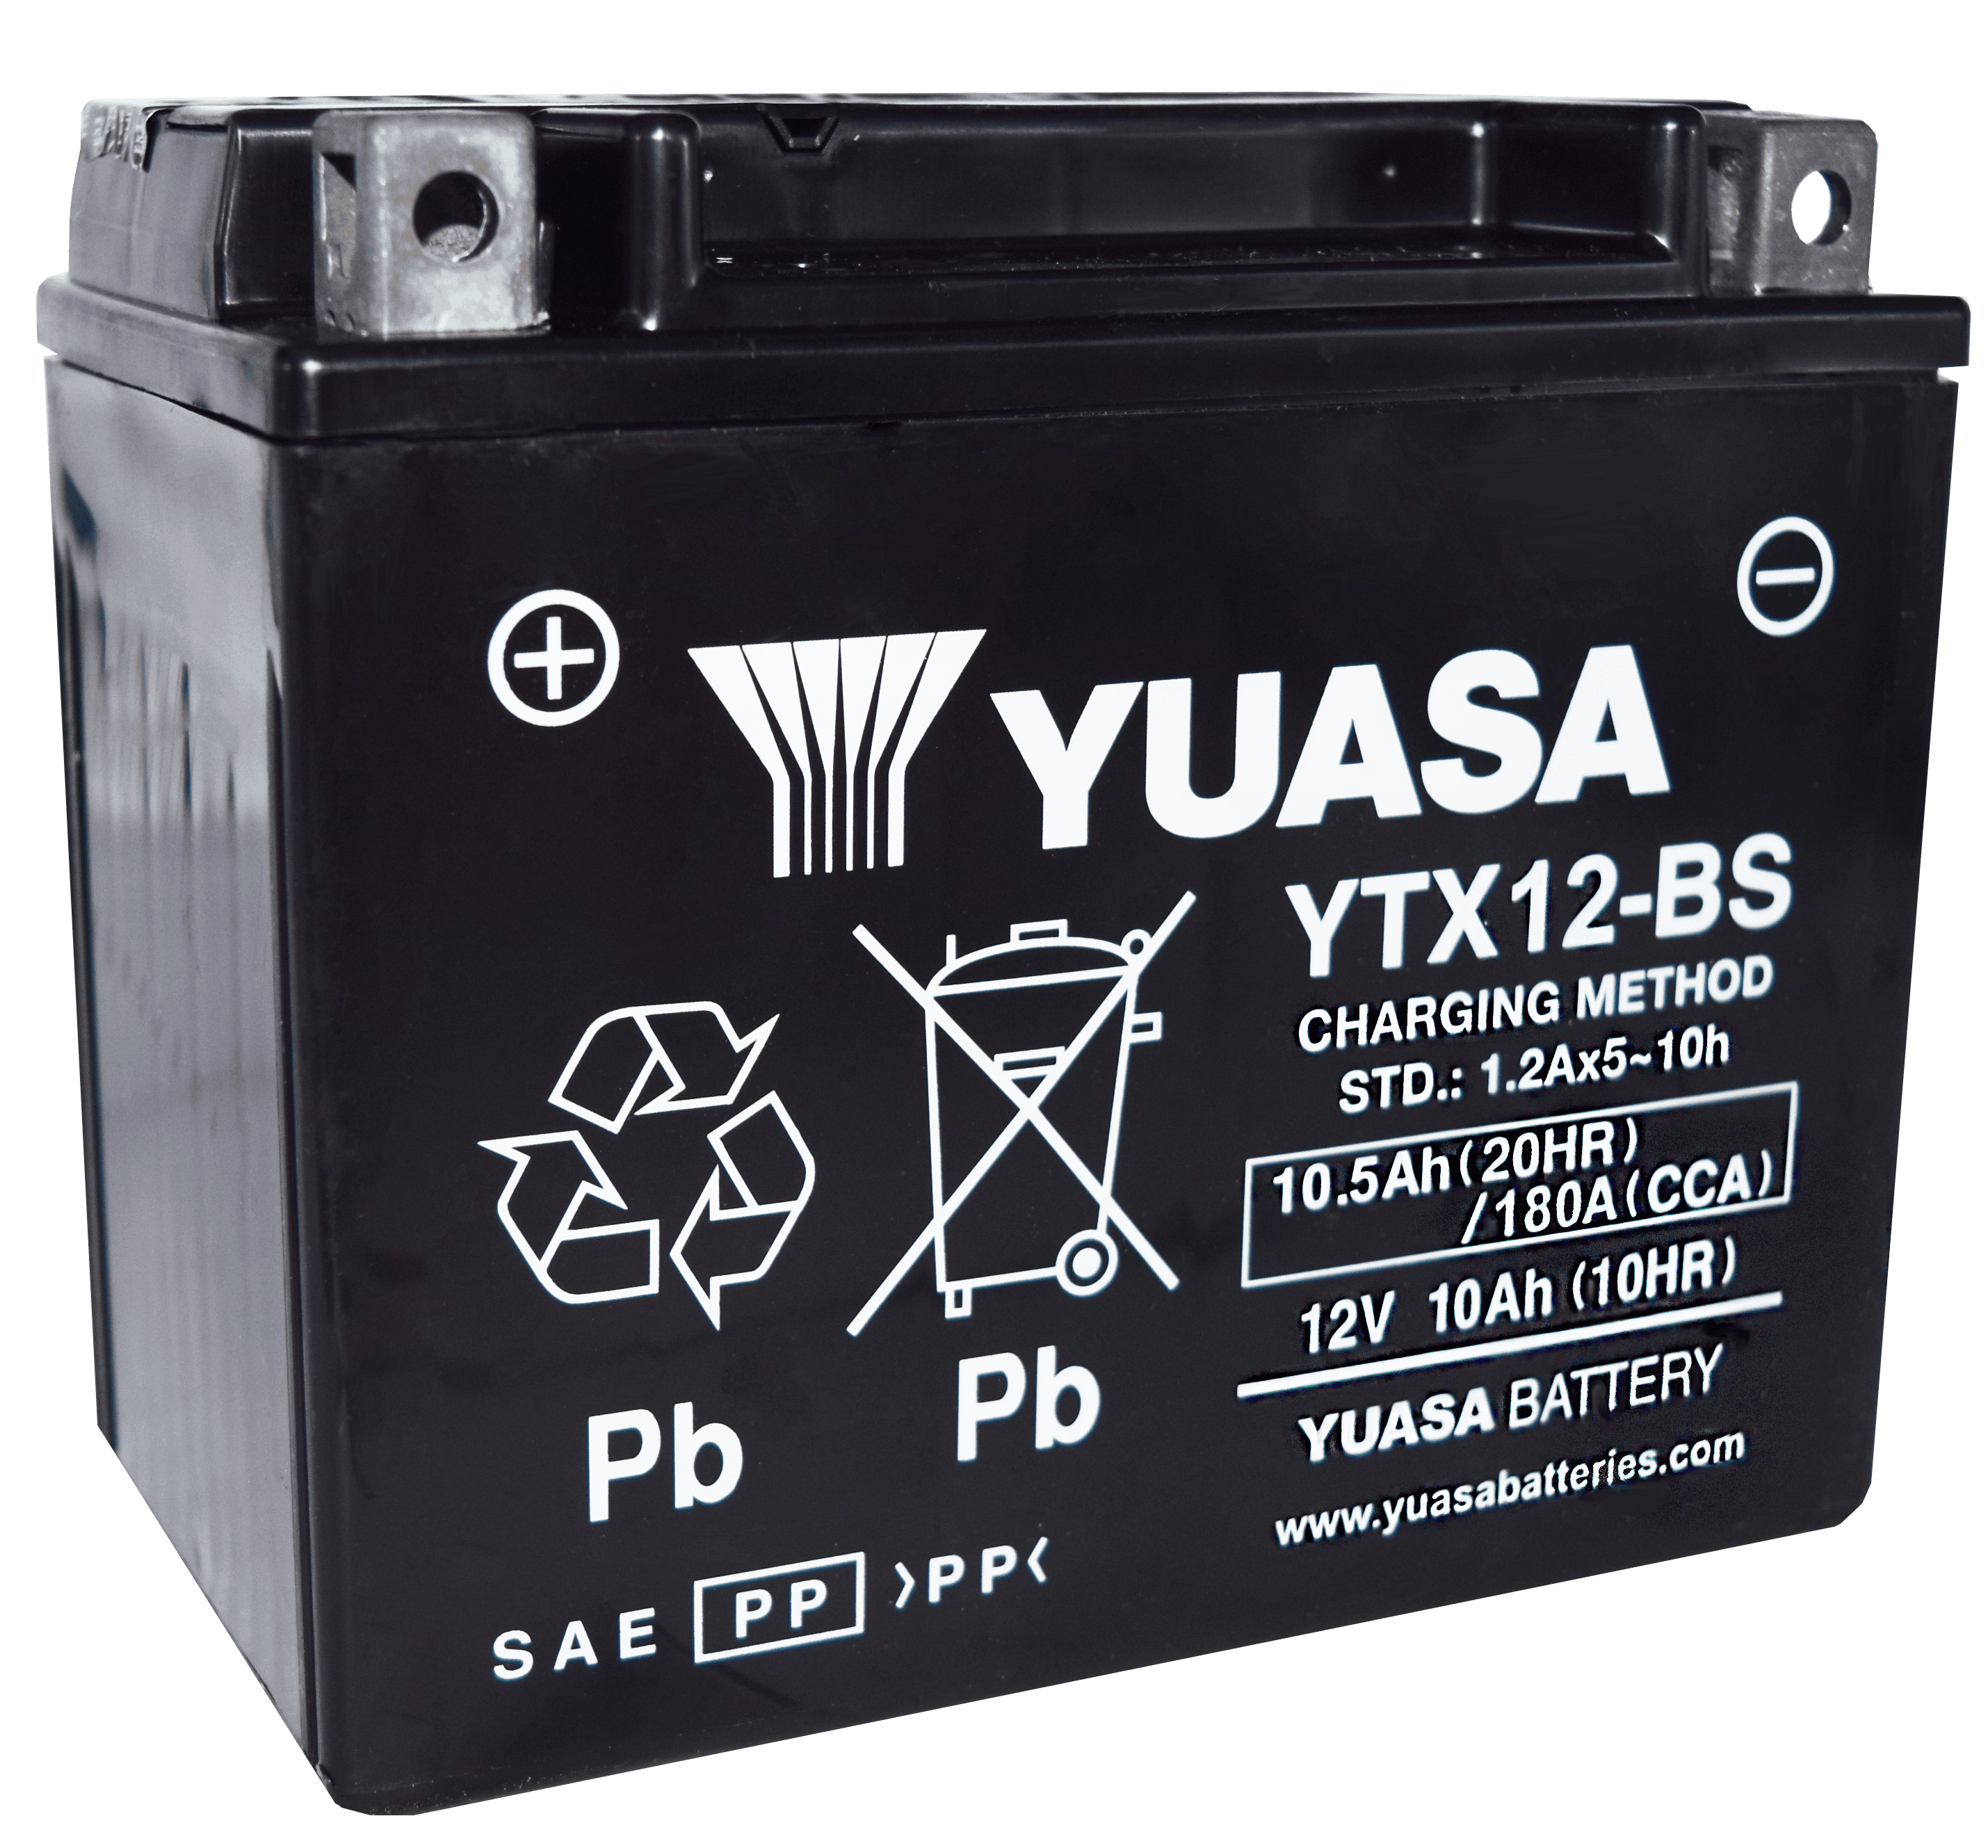 YTX12-BS - Yuasa Battery, Inc.